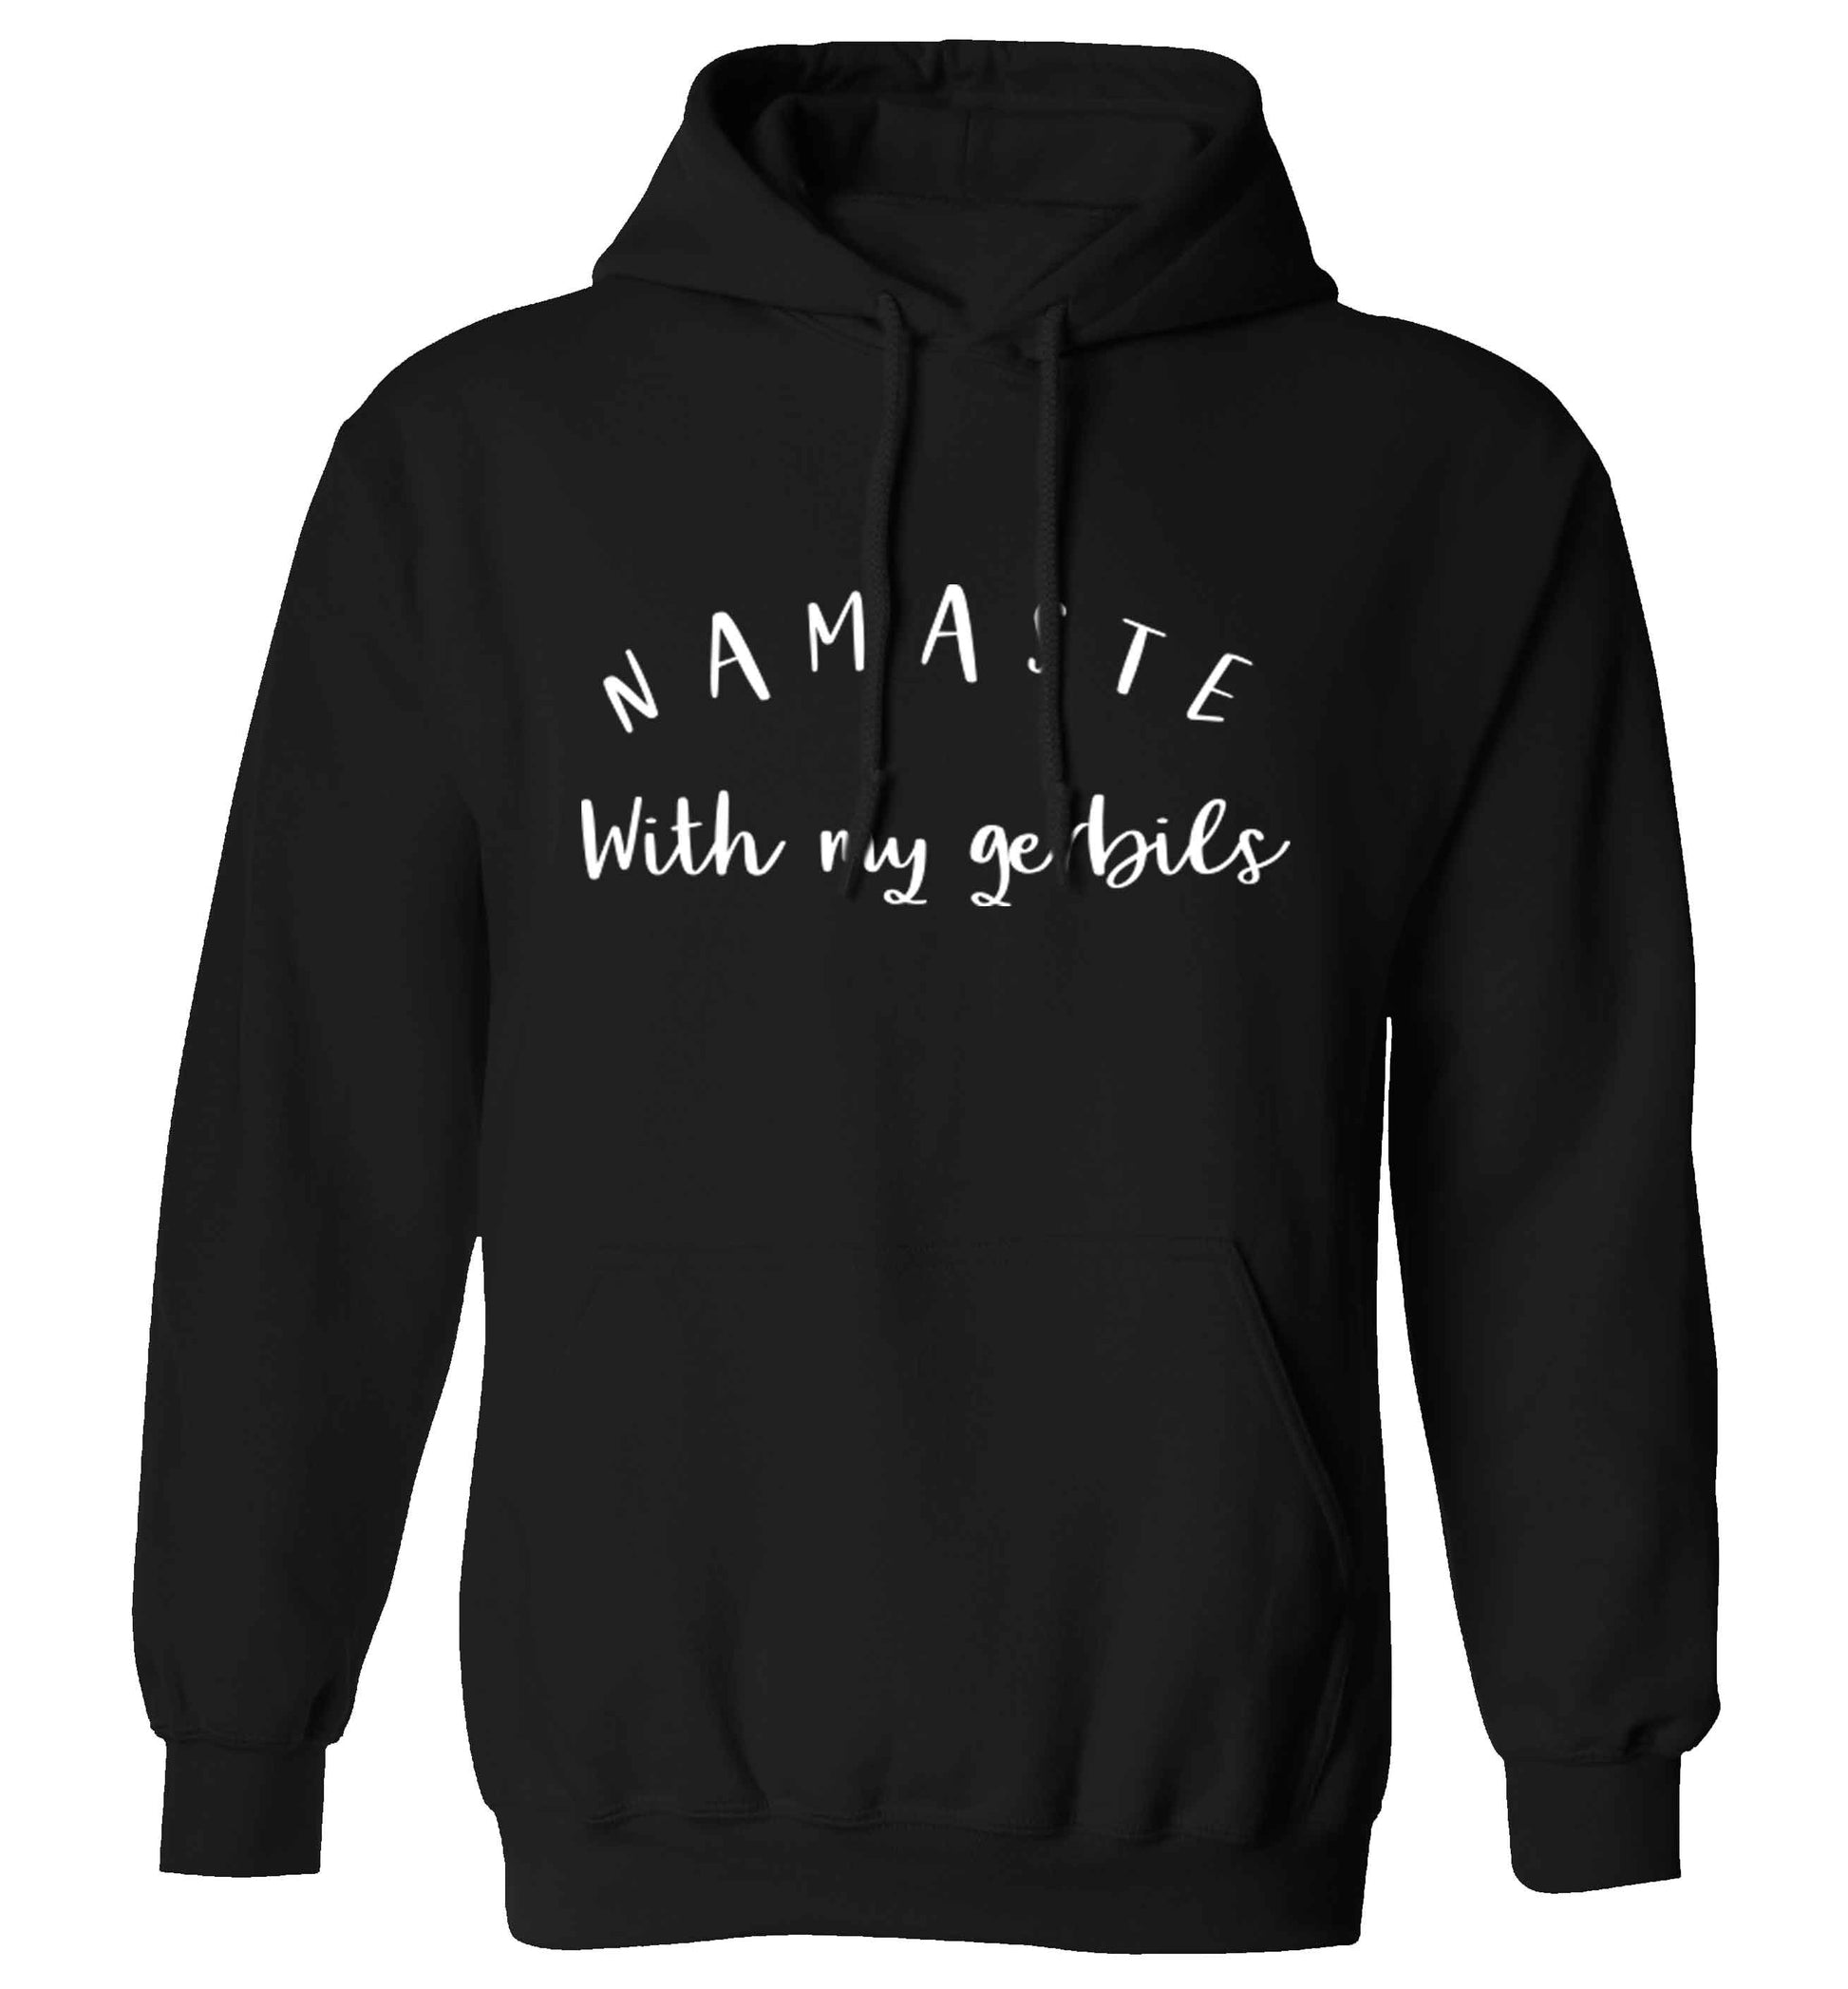 Namaste with my gerbils adults unisex black hoodie 2XL